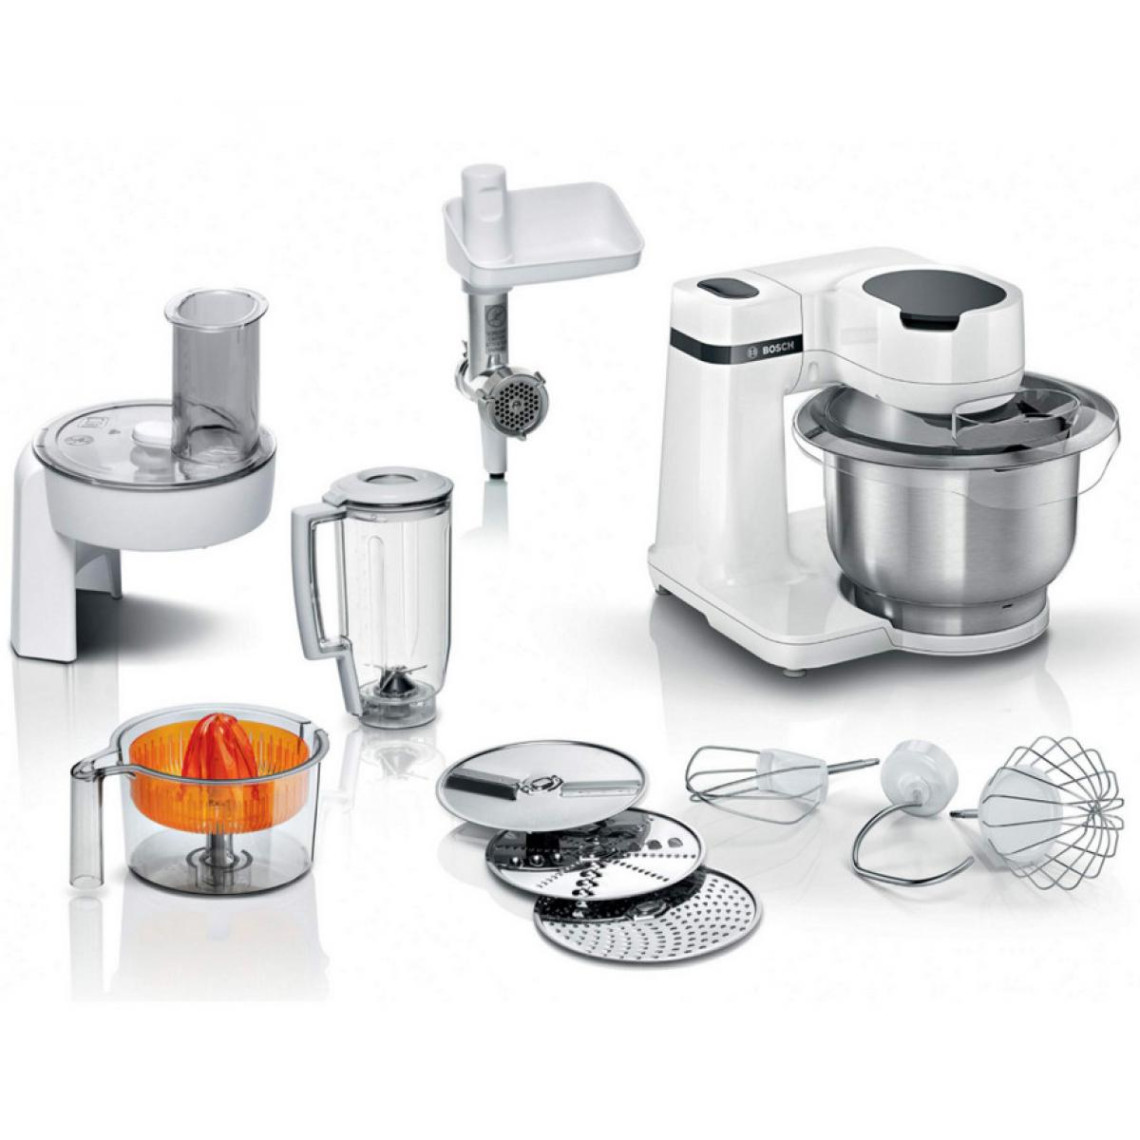 Bosch BOSCH - Kitchen machine Serie 2 - Robot de cuisine - 700W - 4 vitesses + turbo - Bol mélangeur inox 3,8 L - Blender 1,25